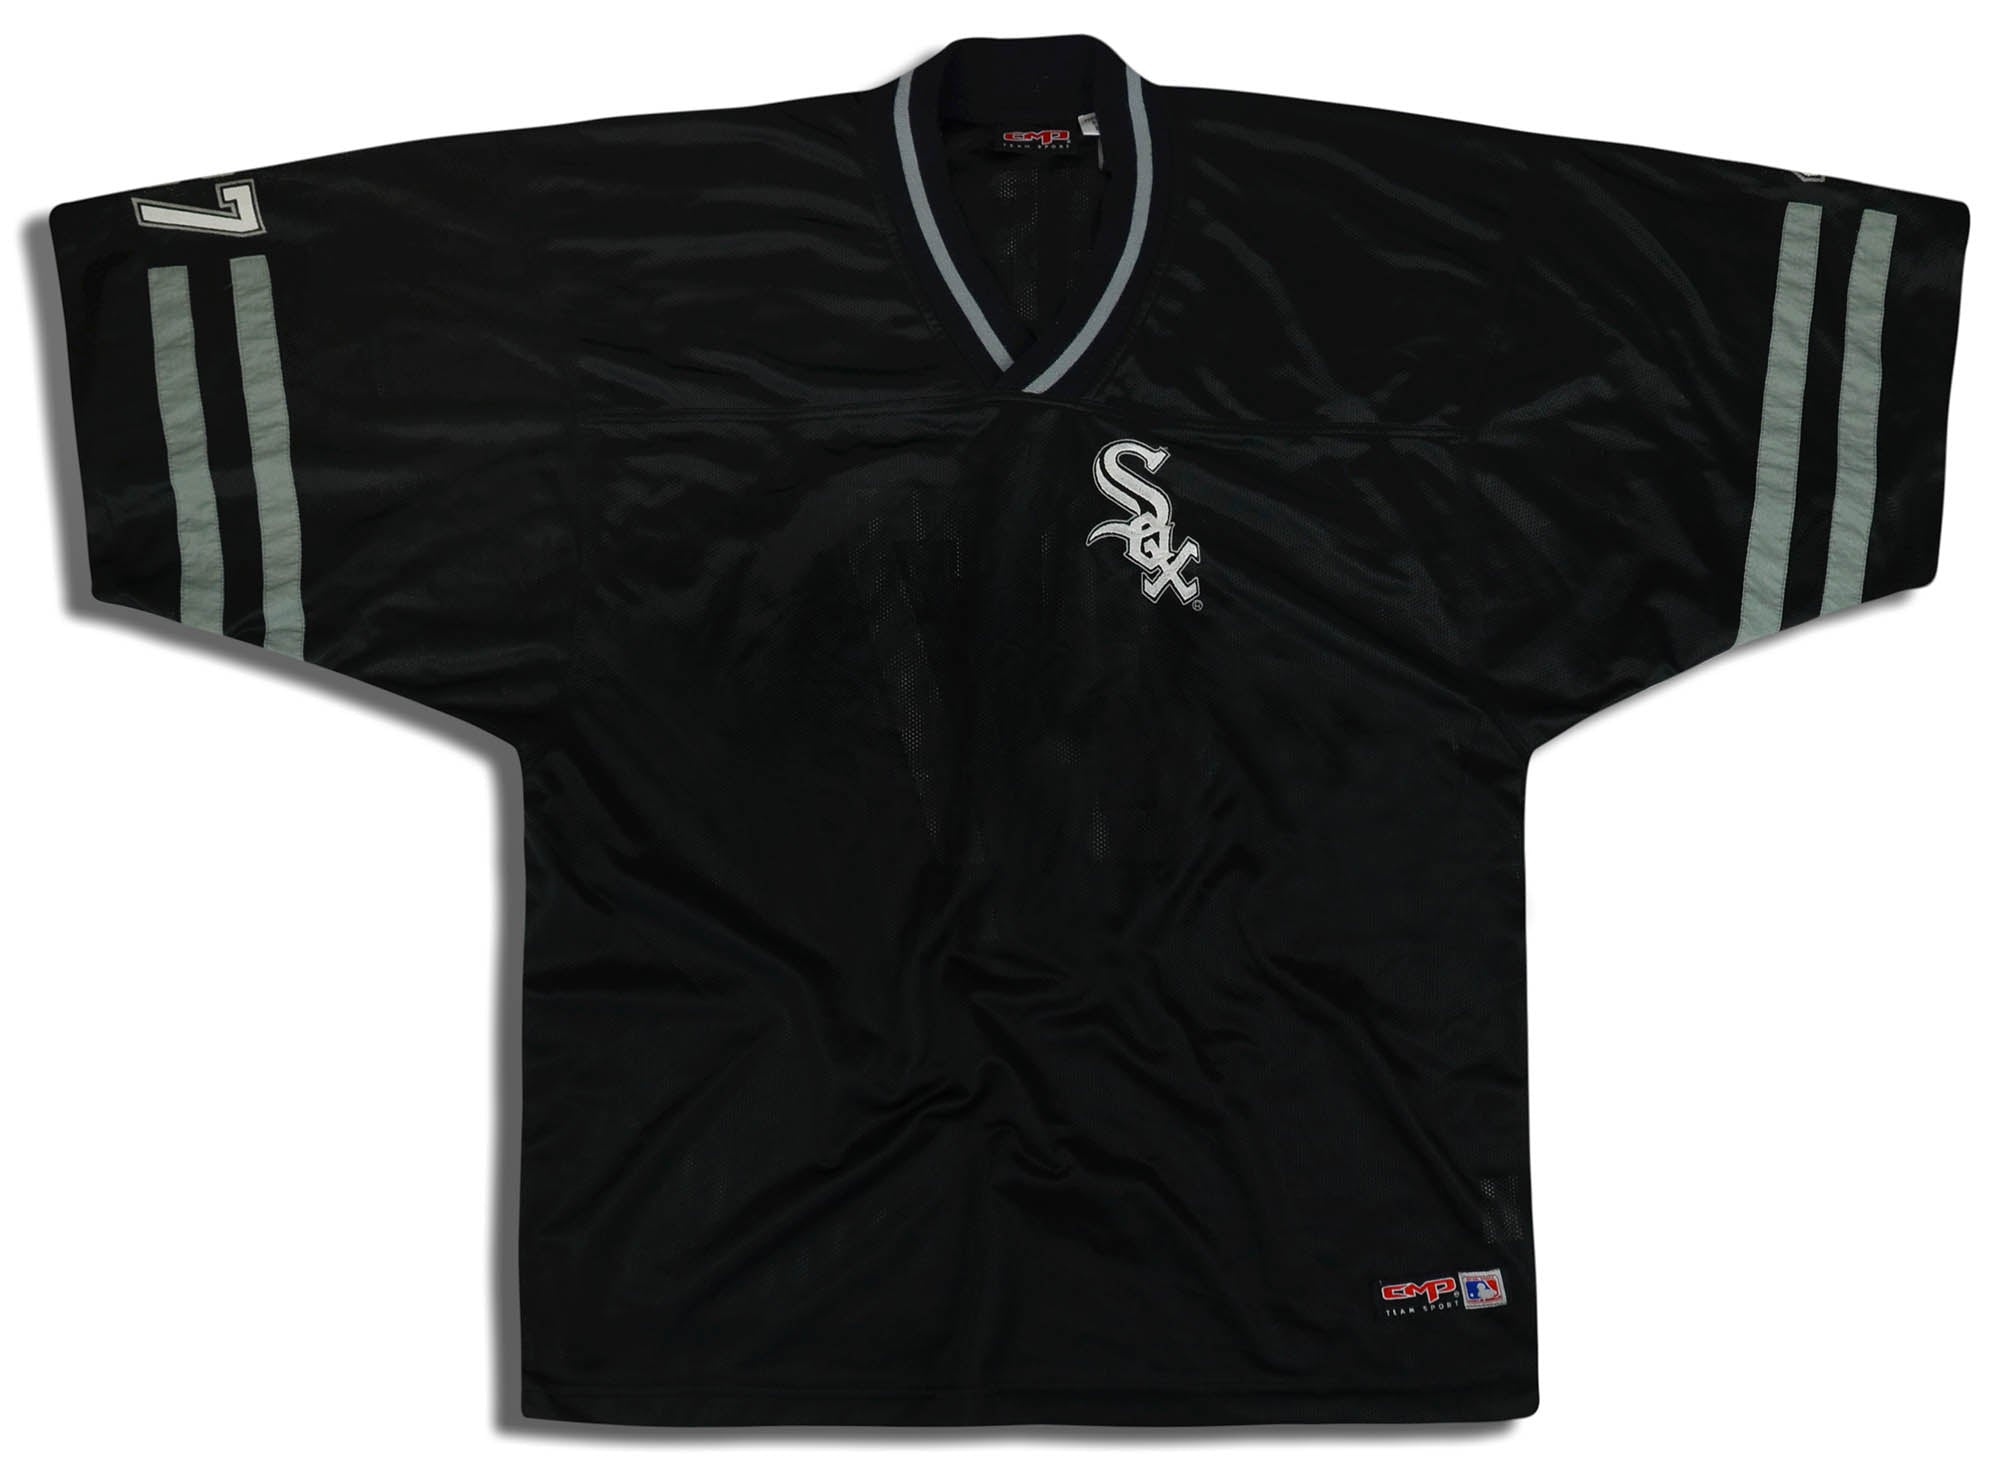 Los White Sox Chicago White Sox Soccer Jersey SGA 5/5/19 Size XL